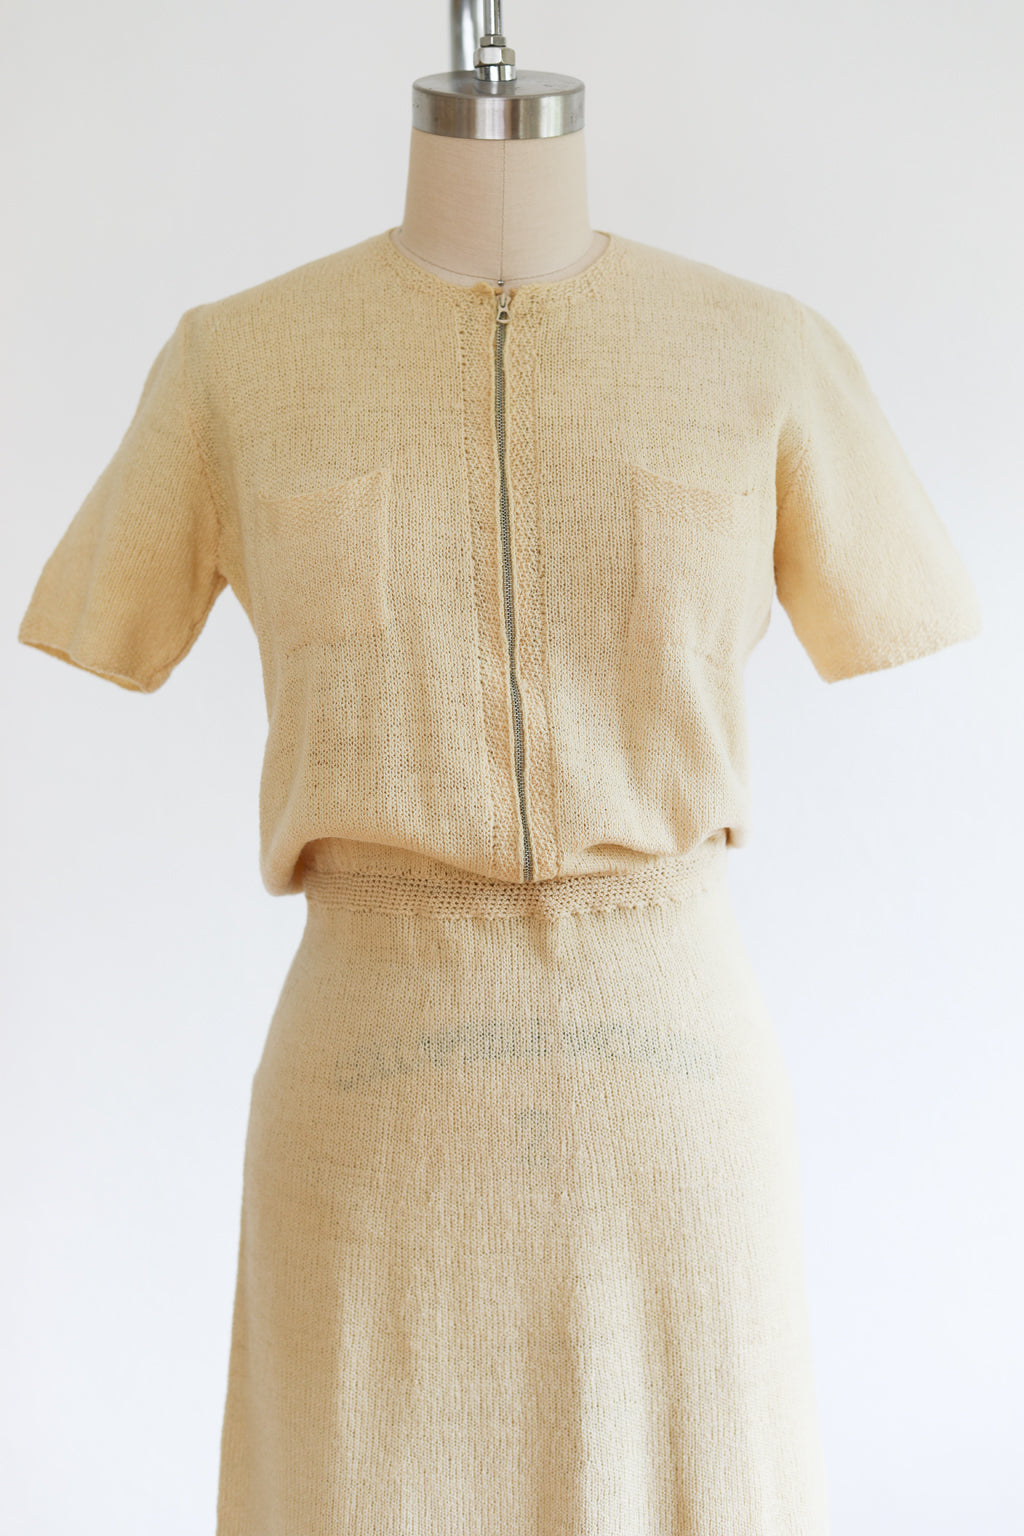 Vintage 1930s Knit Dress - Super Sweetie-Pie Hand-Made Knitwear Dress w Bell Pull Front Metal Zipper Size XS to M